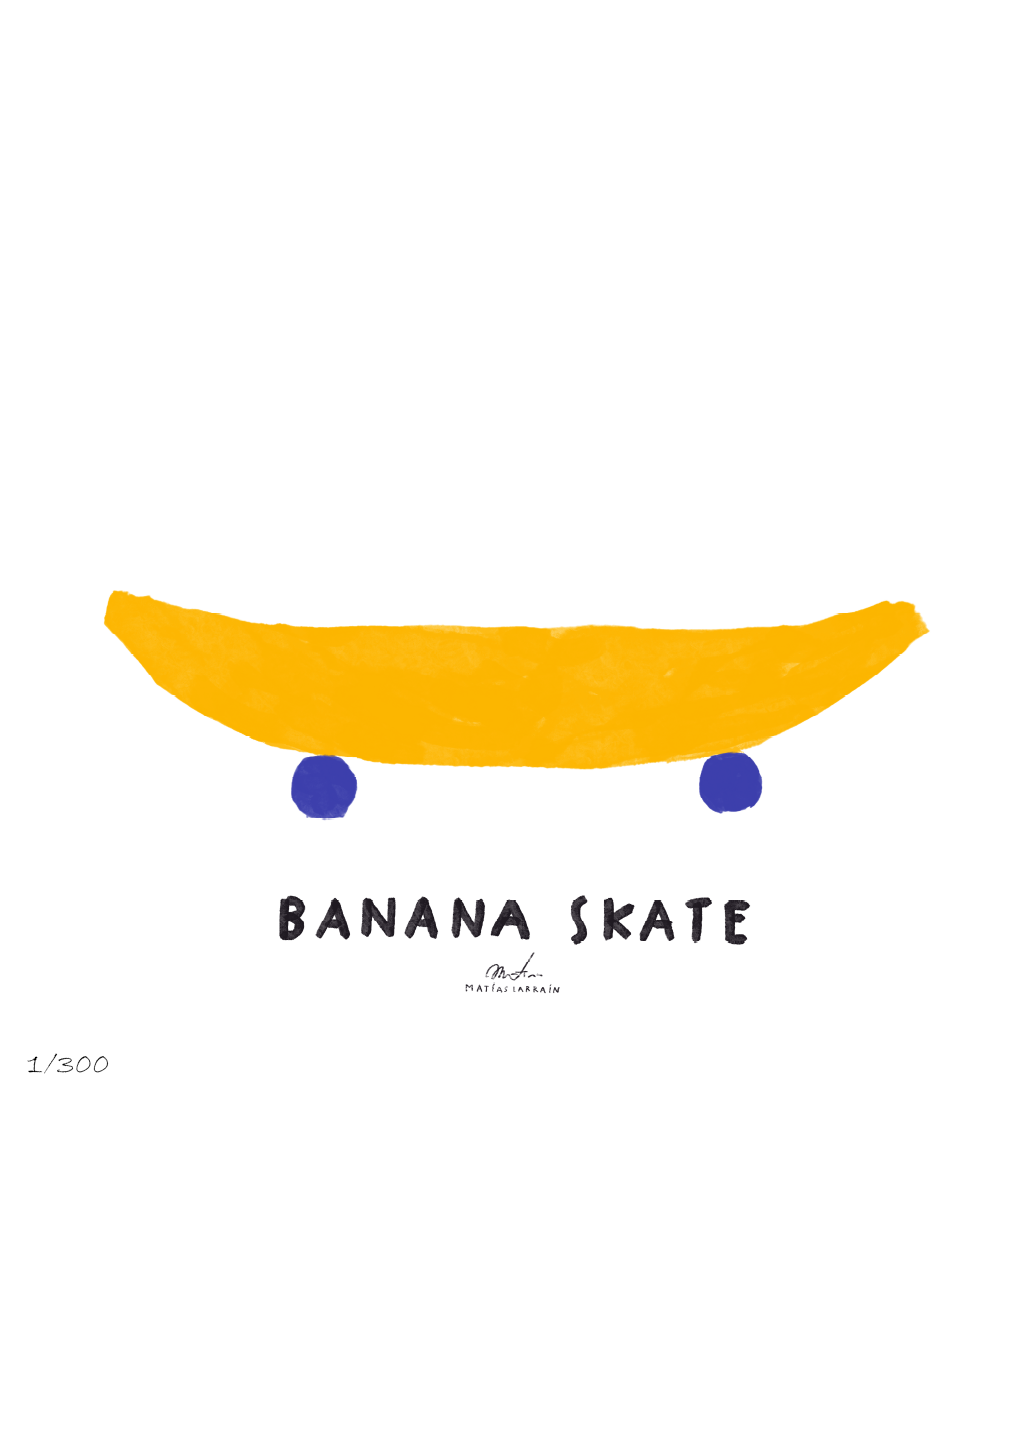 affiche-matias-larrain-banana-skate-1